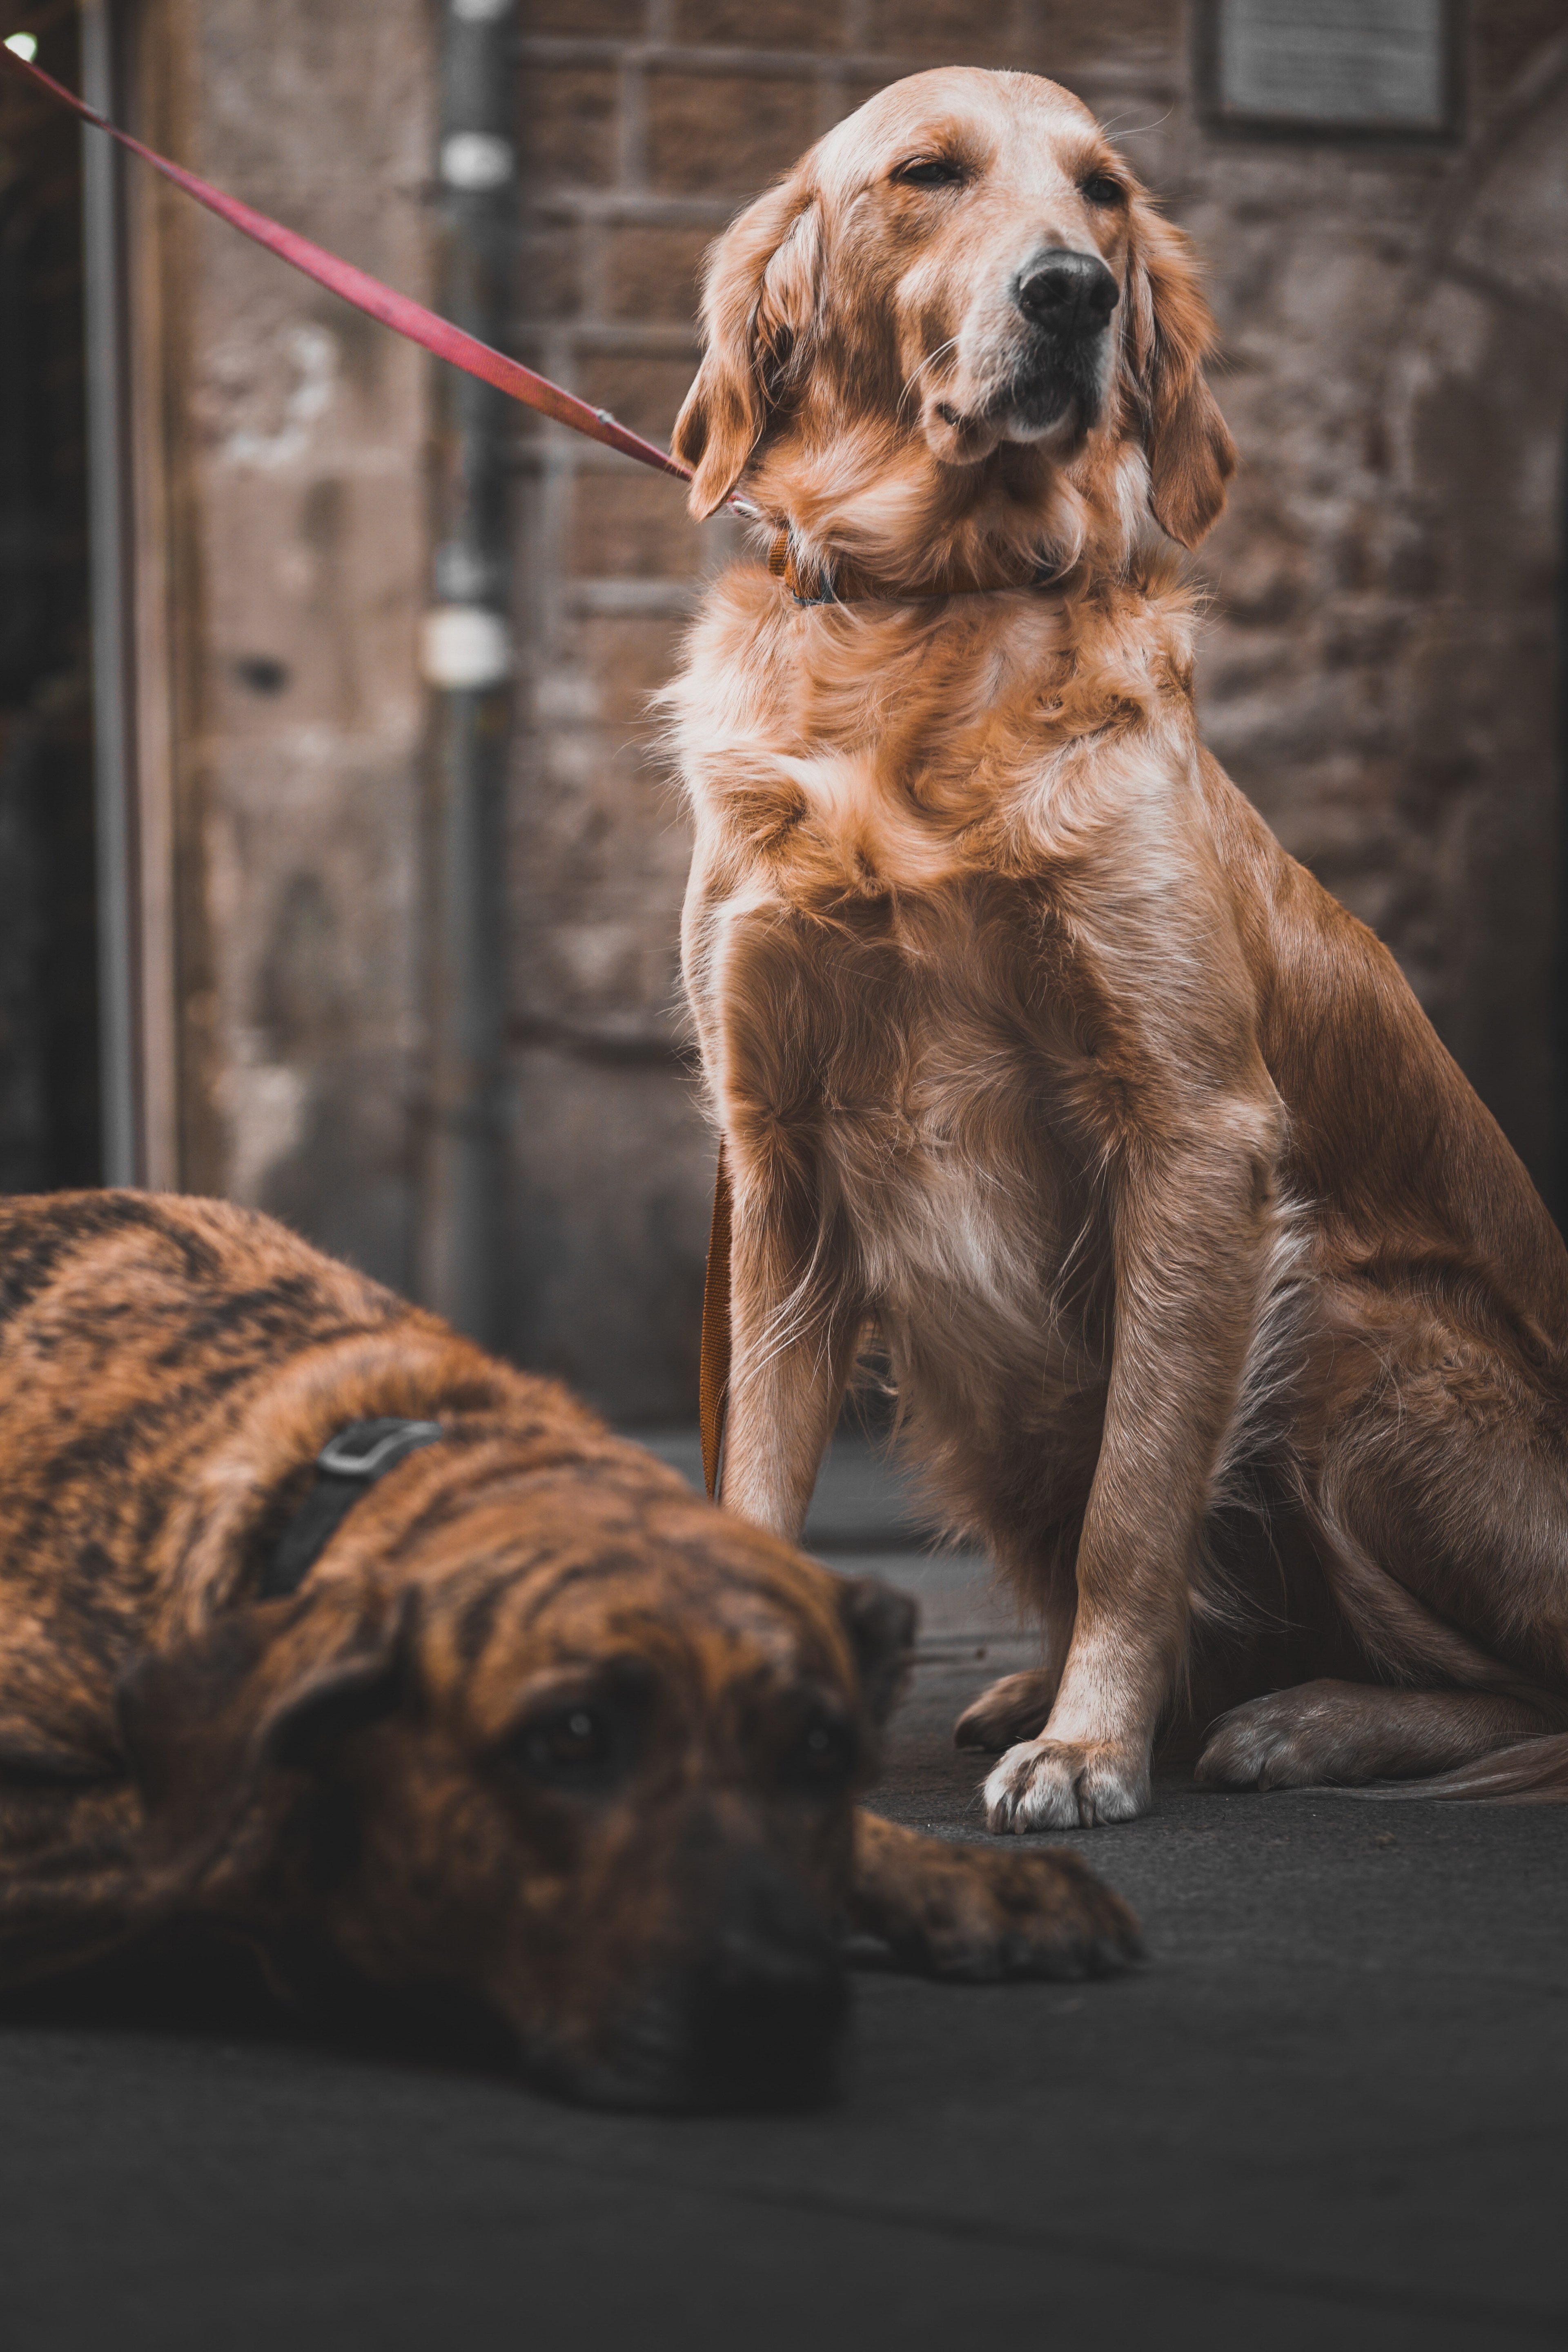 Wallpaper / dog pet canine and golden retriever HD 4k wallpaper free download